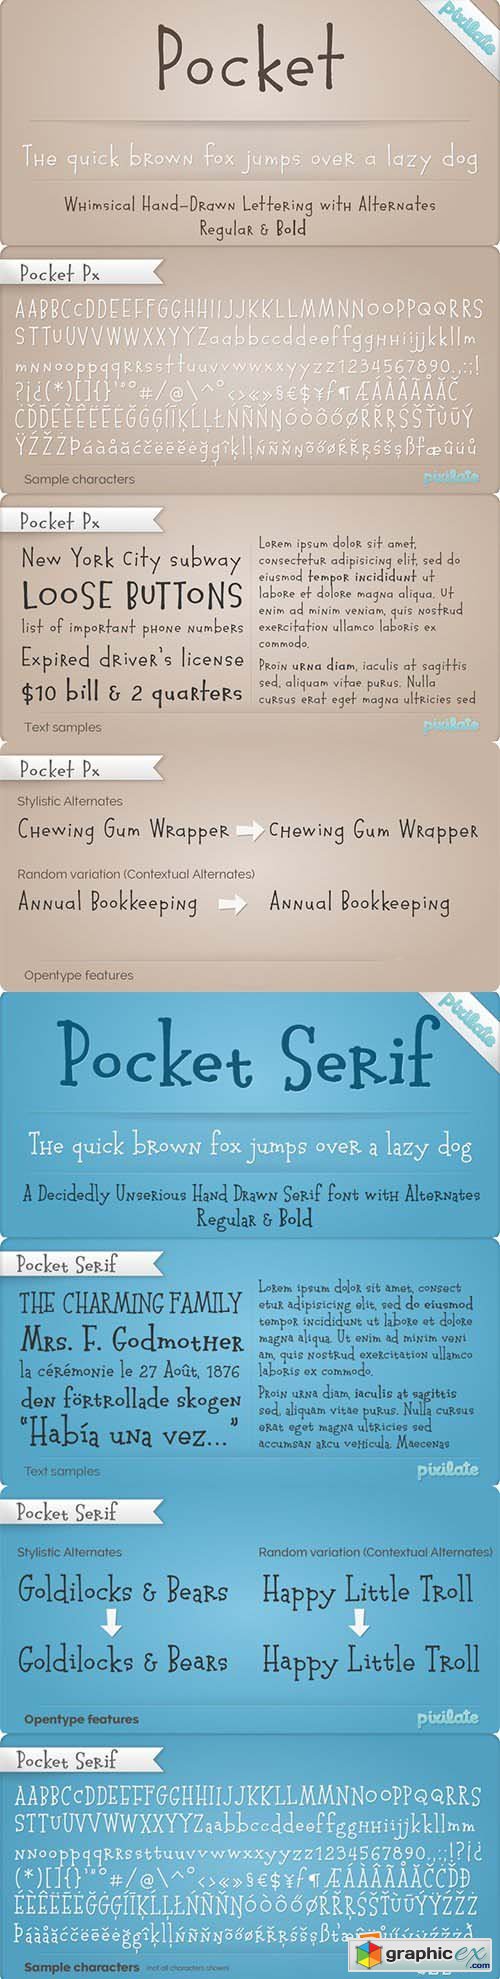 Pocket Px and Pocket Px Serif Font Family - 4 Font $72